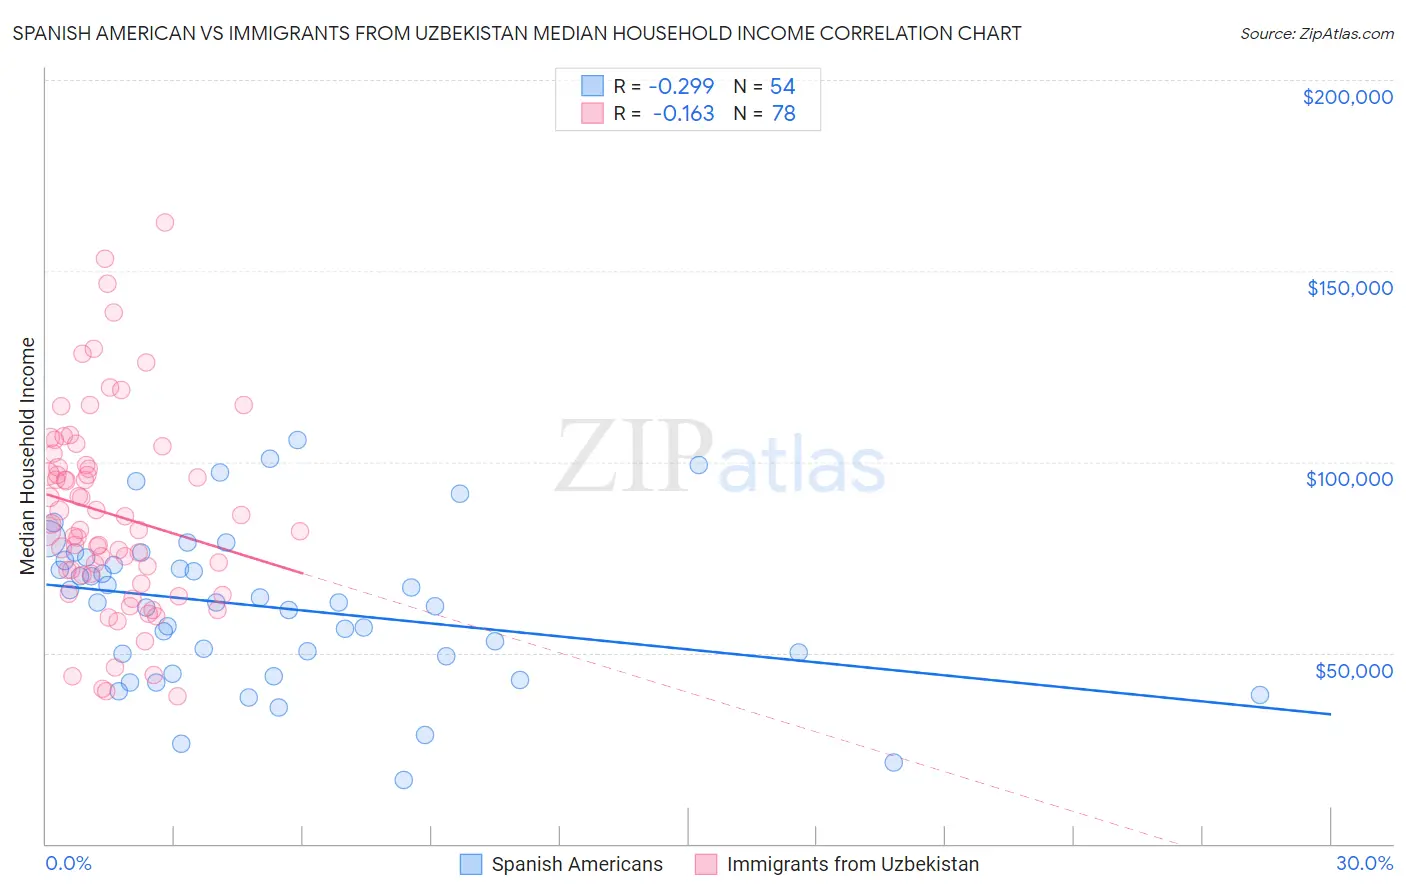 Spanish American vs Immigrants from Uzbekistan Median Household Income